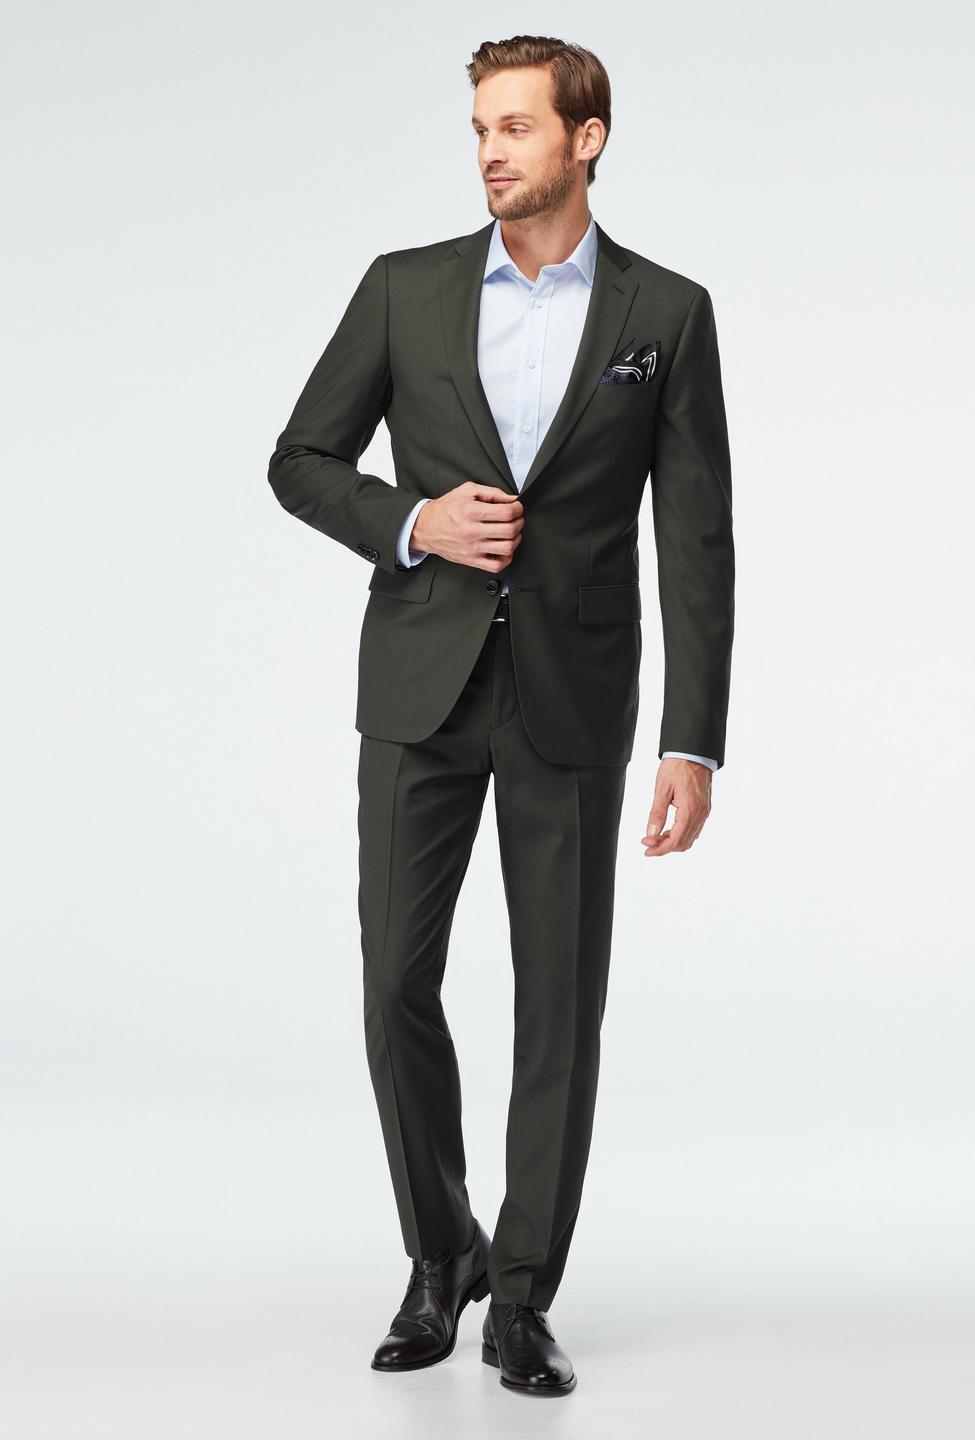 Milano Olive Suit